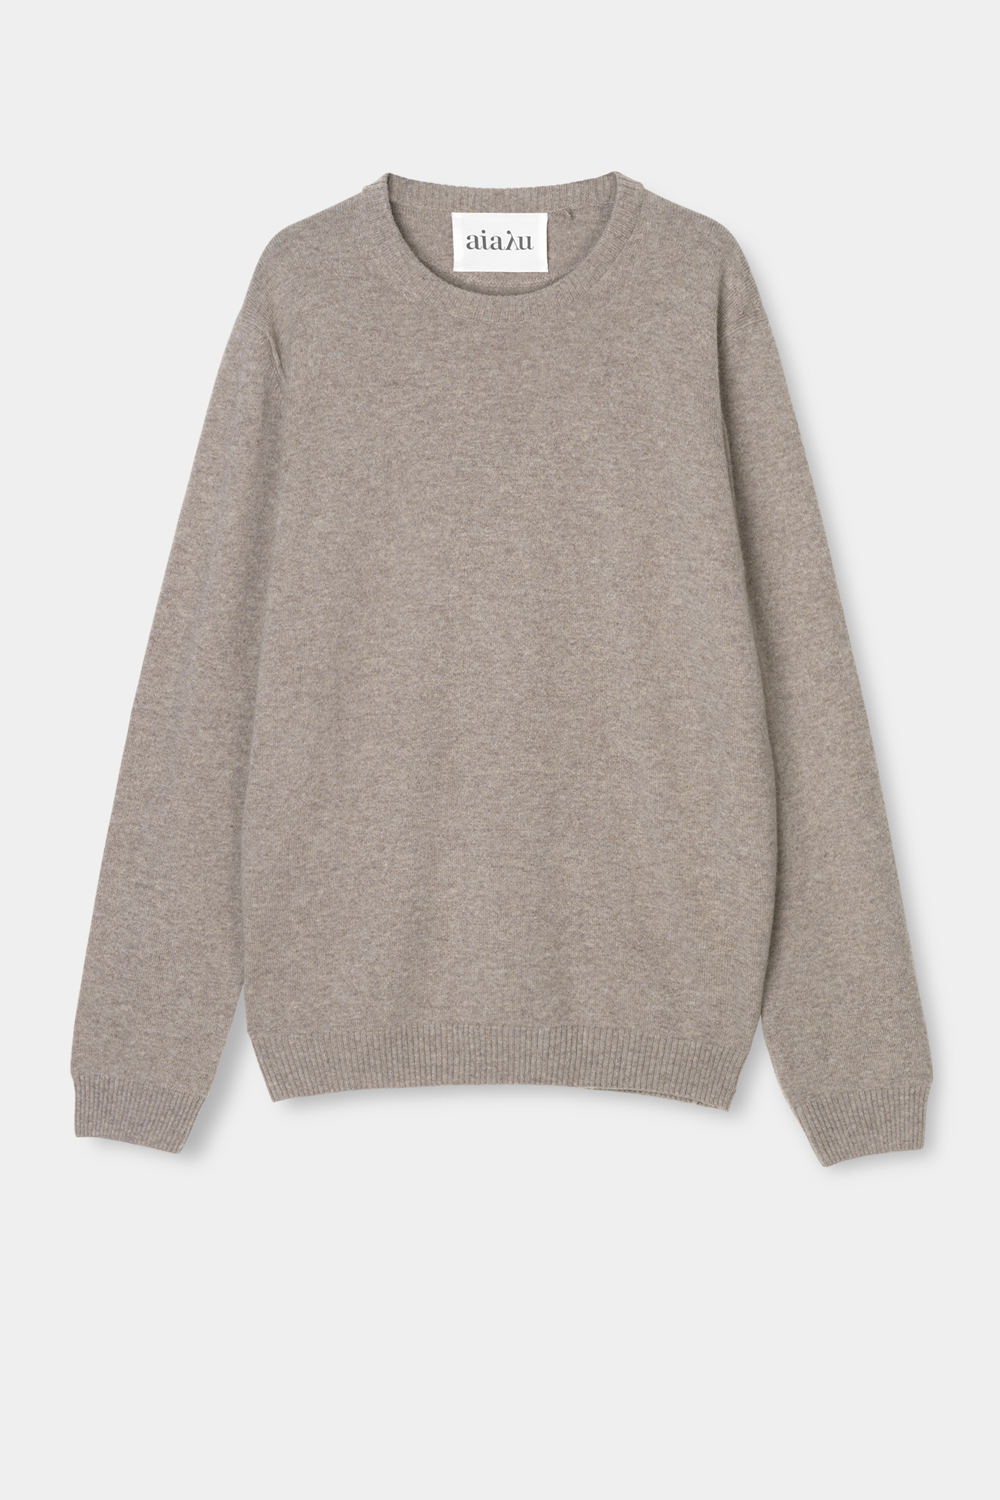 Leonardo Cashmere Sweater, Pure Grain